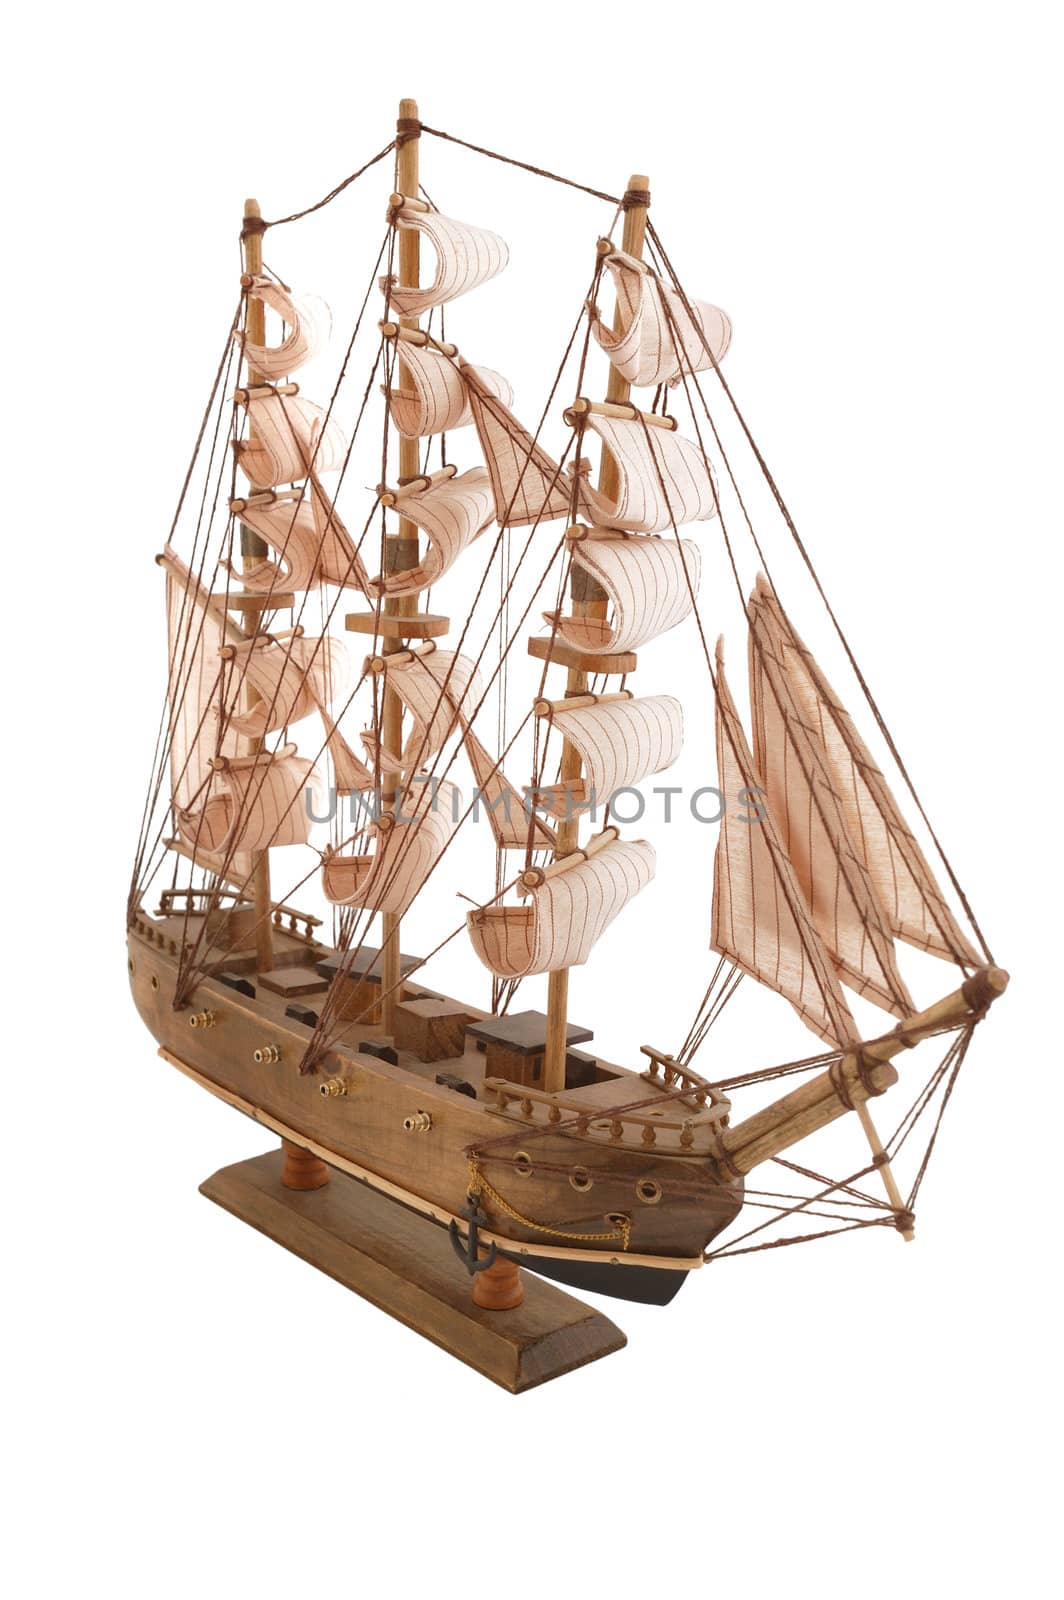 Antique ship-souvenir on white background